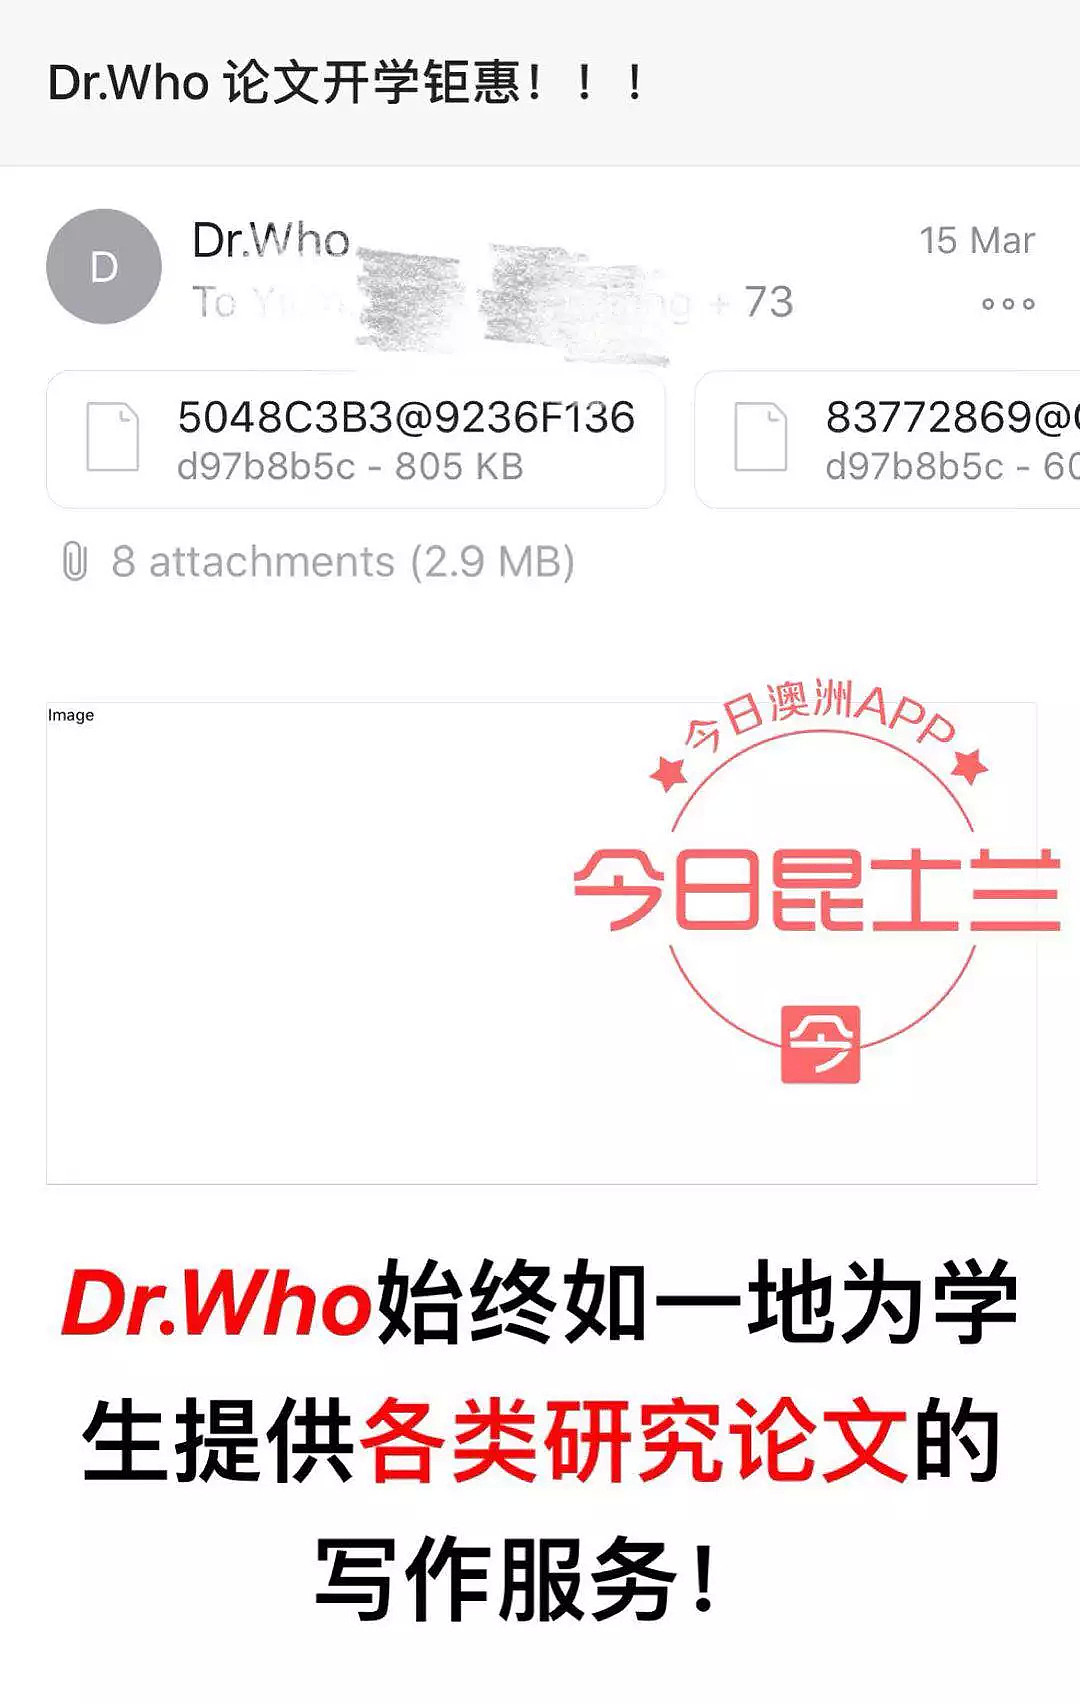 UQ中国学生邮箱惊现代写广告，按姓氏排序批量投放，究竟是谁泄露了信息？（组图） - 2